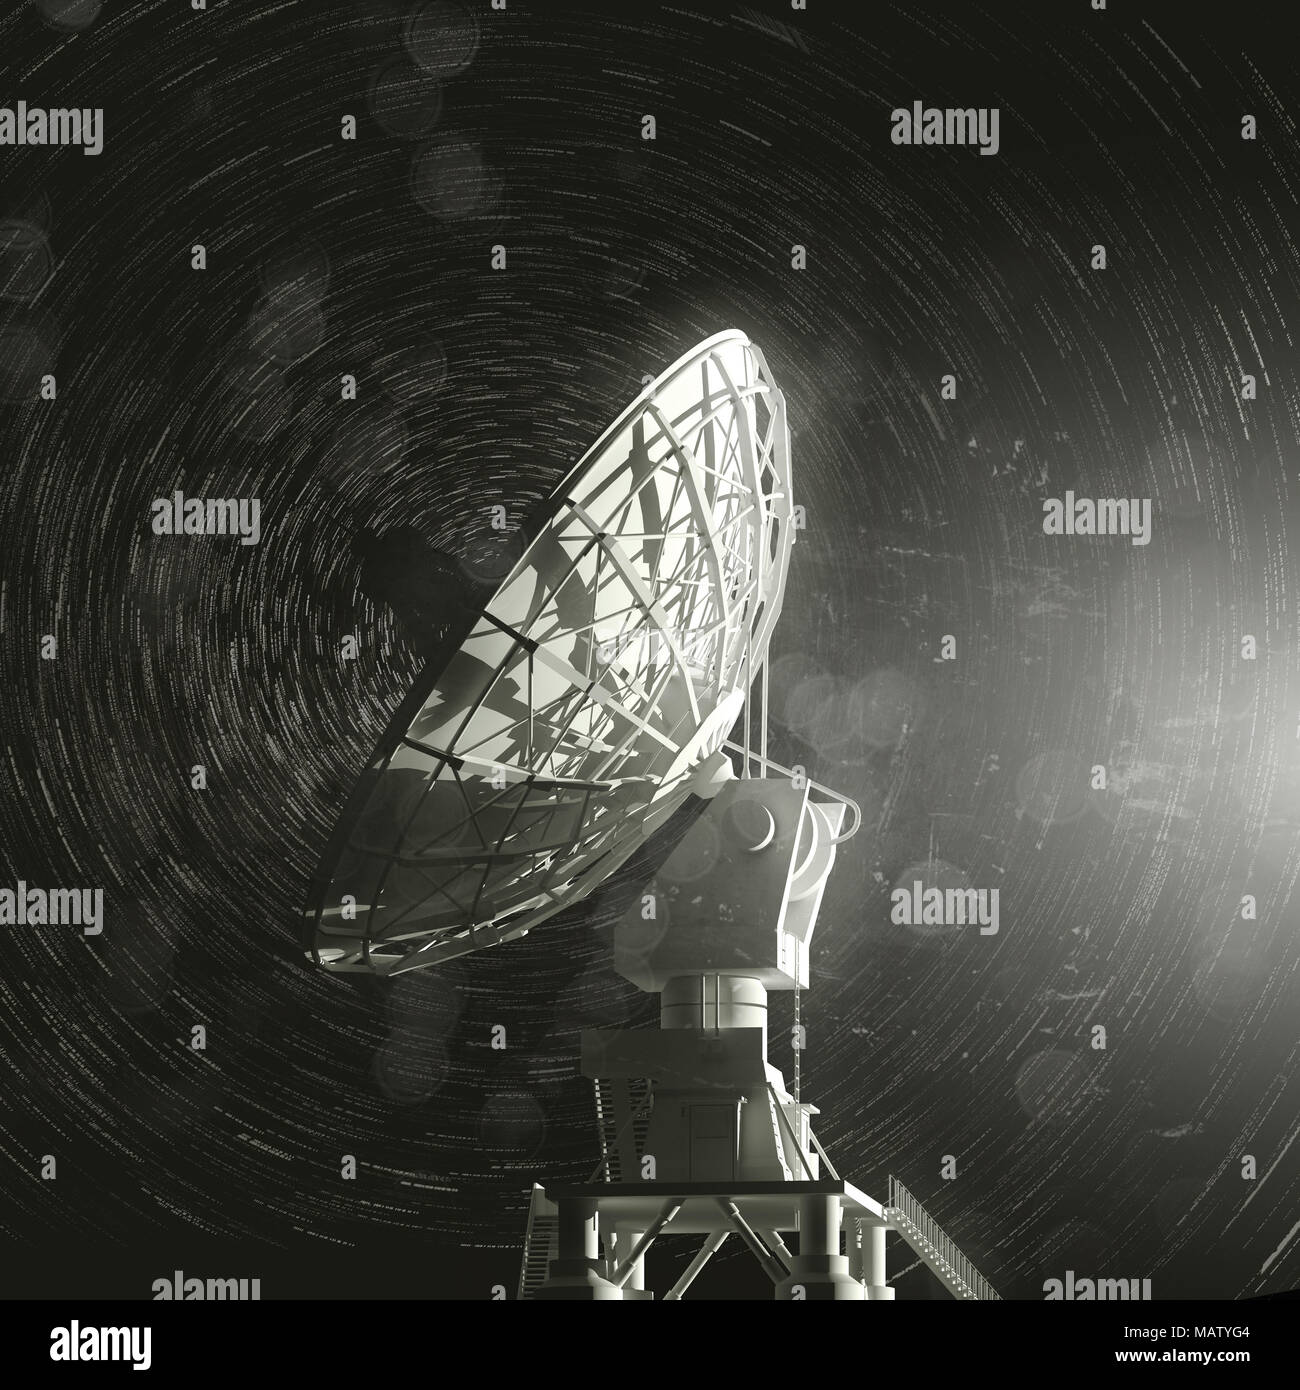 a single very large radio telescope pointing up towards the stars. 3D illustration Stock Photo